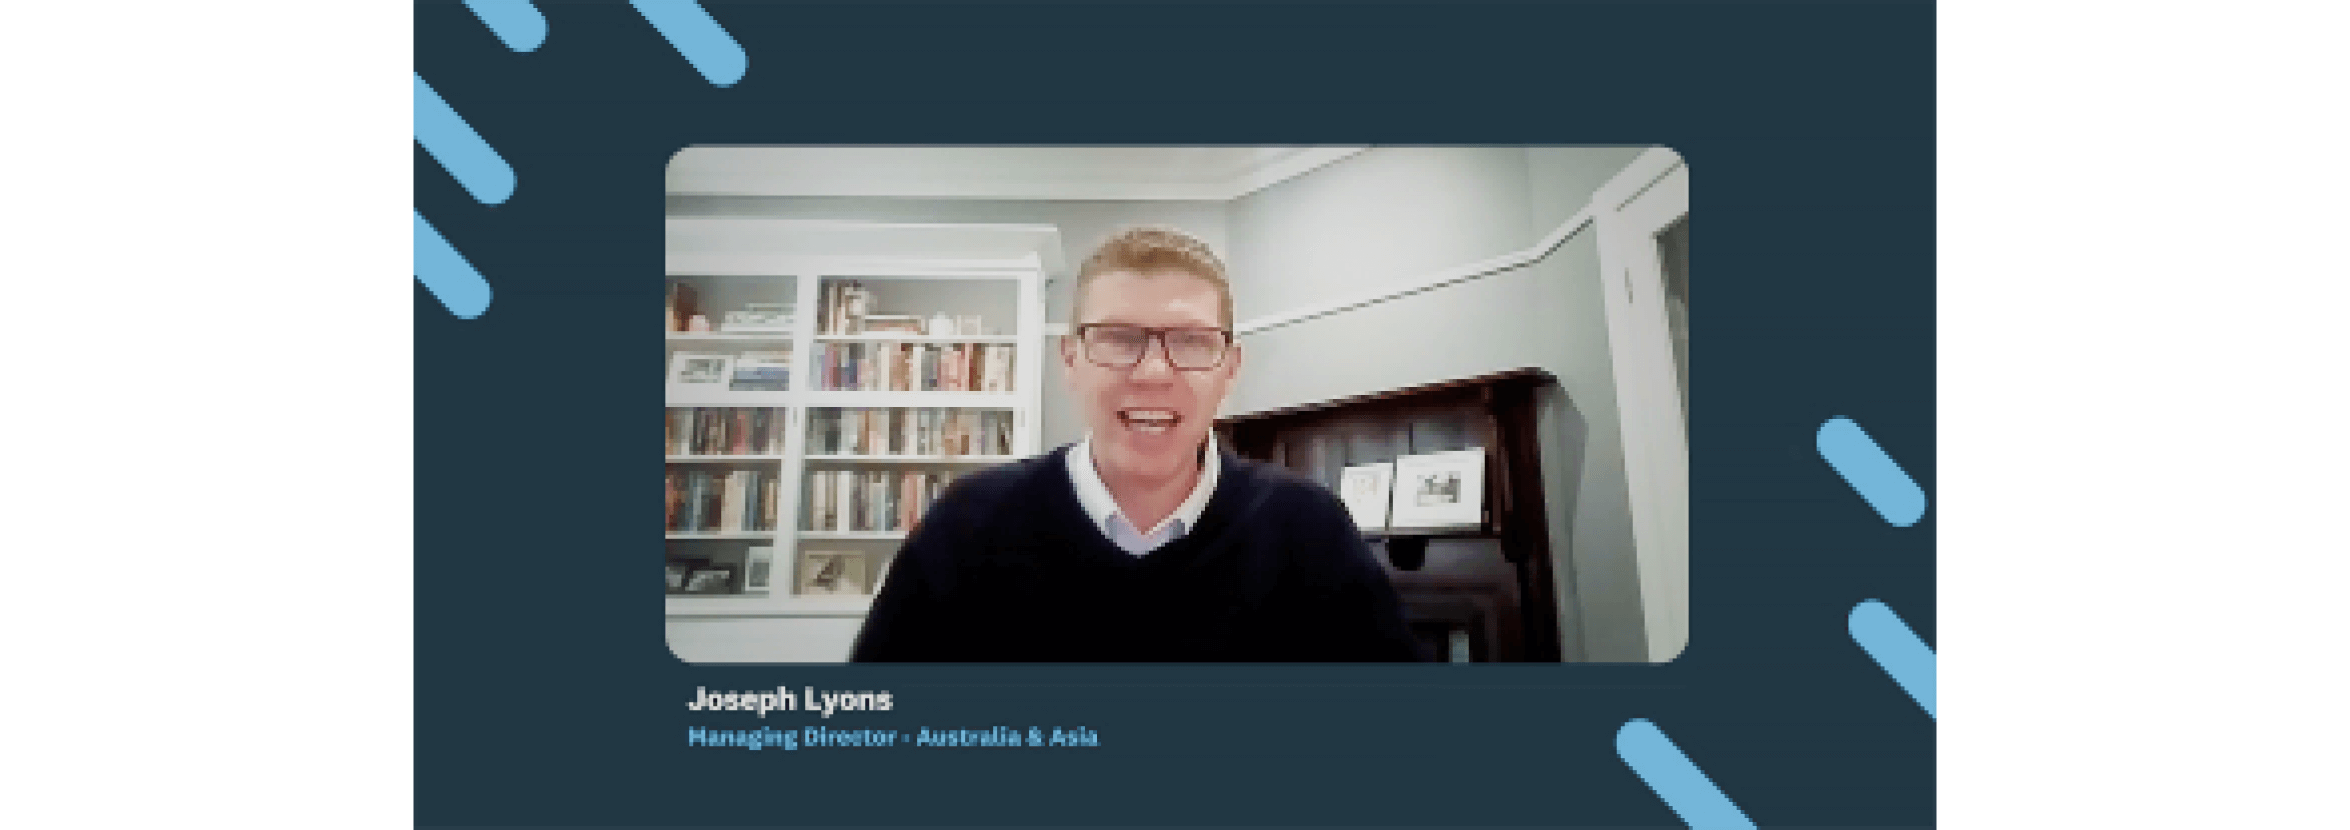 Managing director of Xero Australia & Asia, Joseph Lyons.